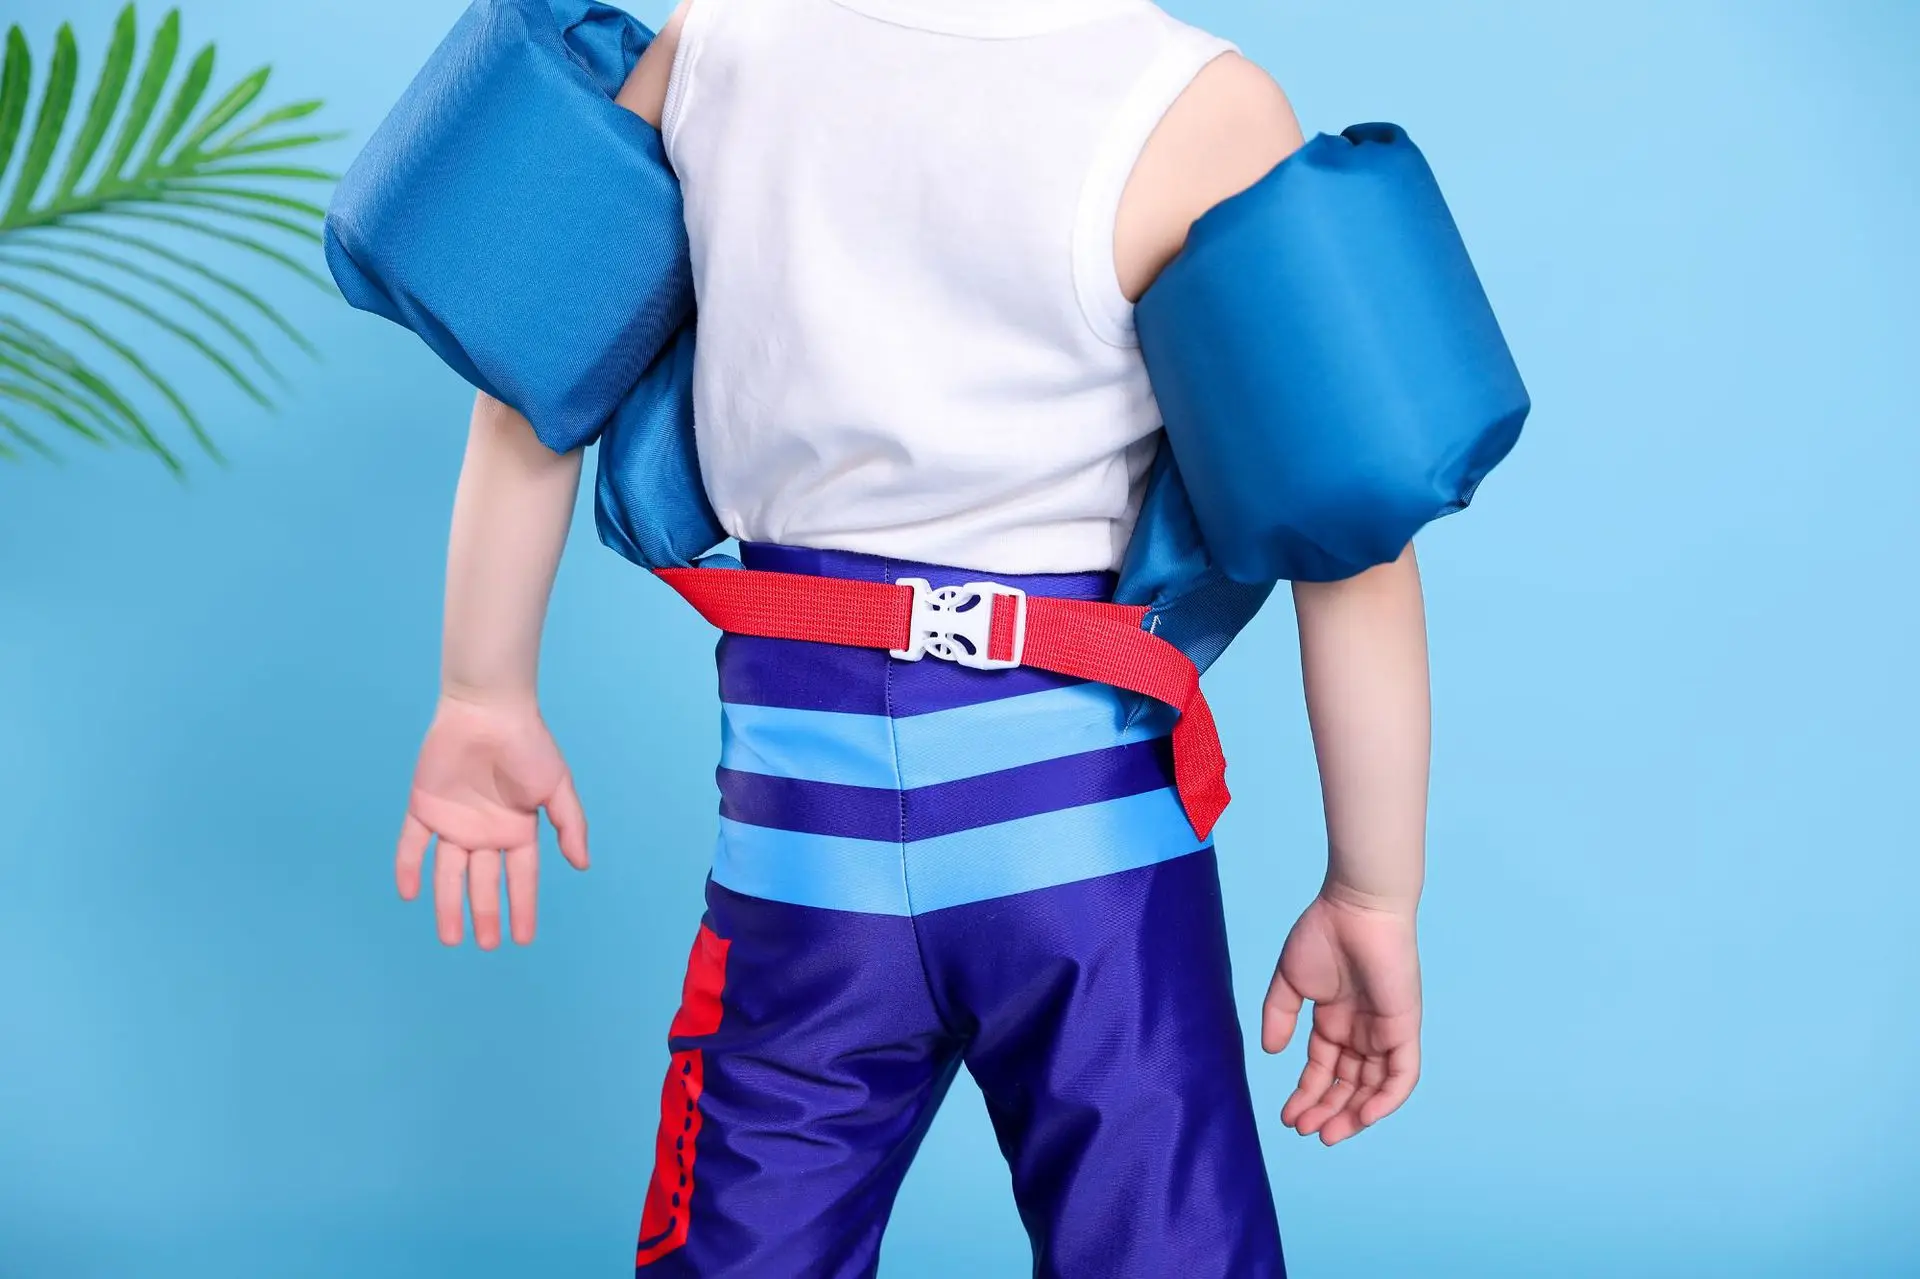 New Original Puddle Jumper Kids Water Swimming Life Jacket Life Vest for Children